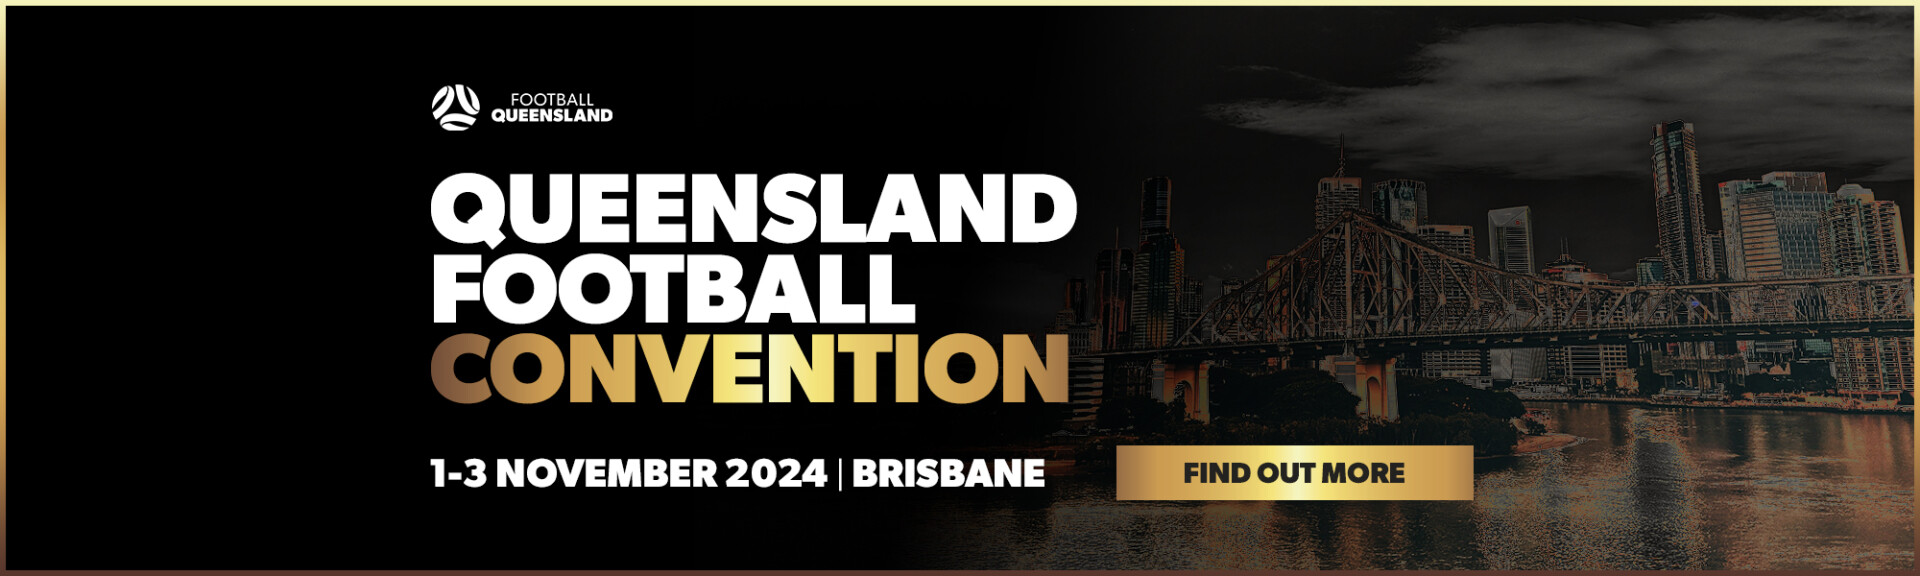 2311001 - General - Annual Football Convention Announcement - Web Banner - 2000x600